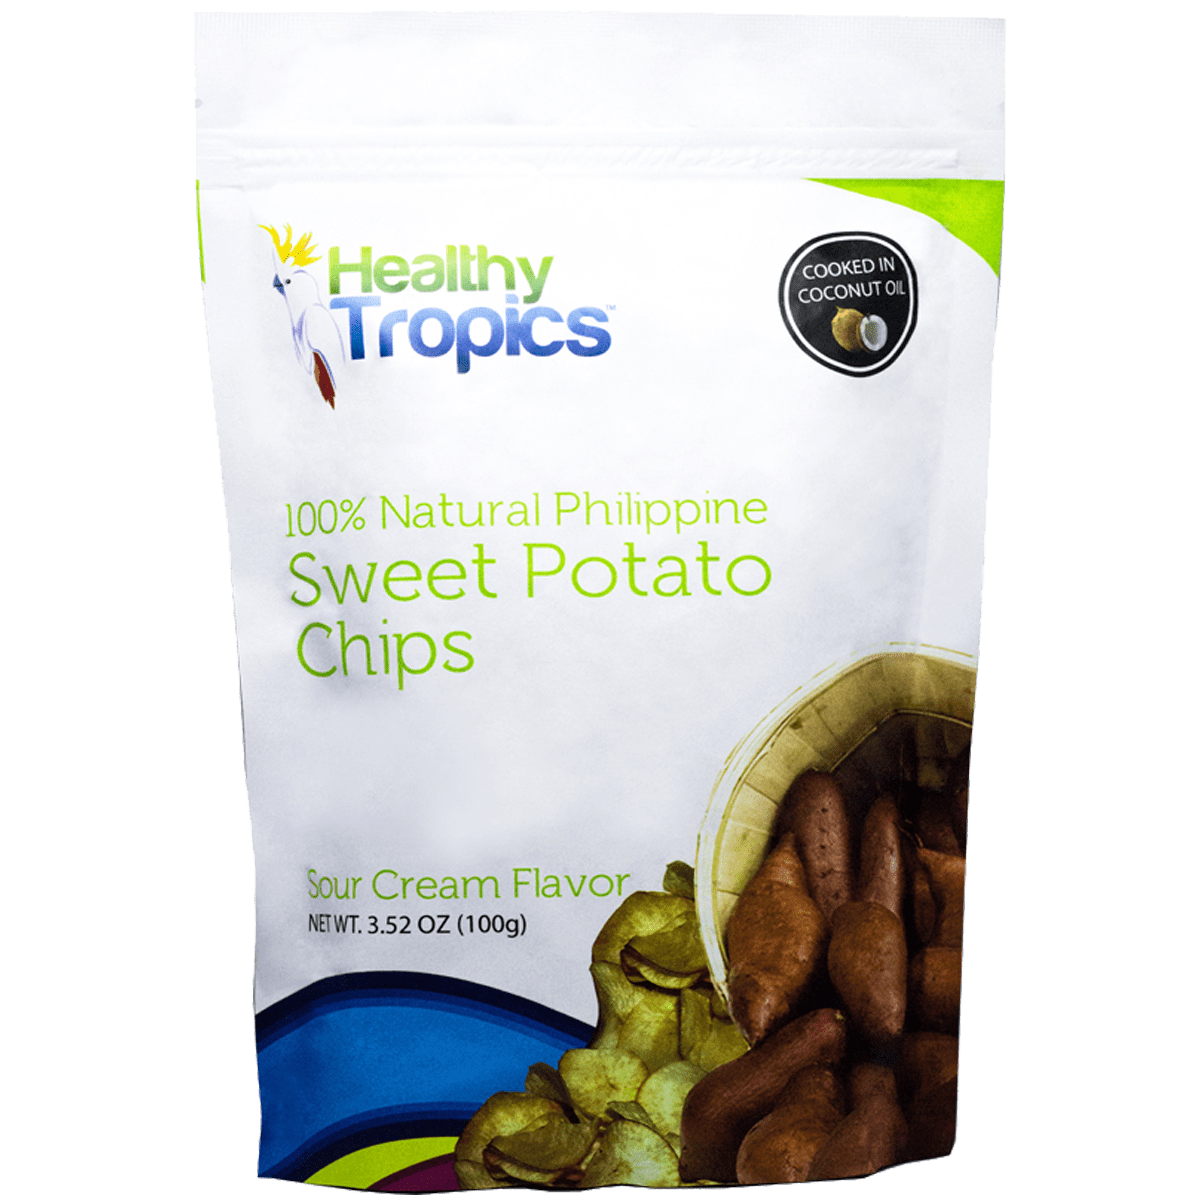 Healthy Tropics 100% Natural Philippine Sweet Potato Chips – Sour Cream Flavor snacks, 100g